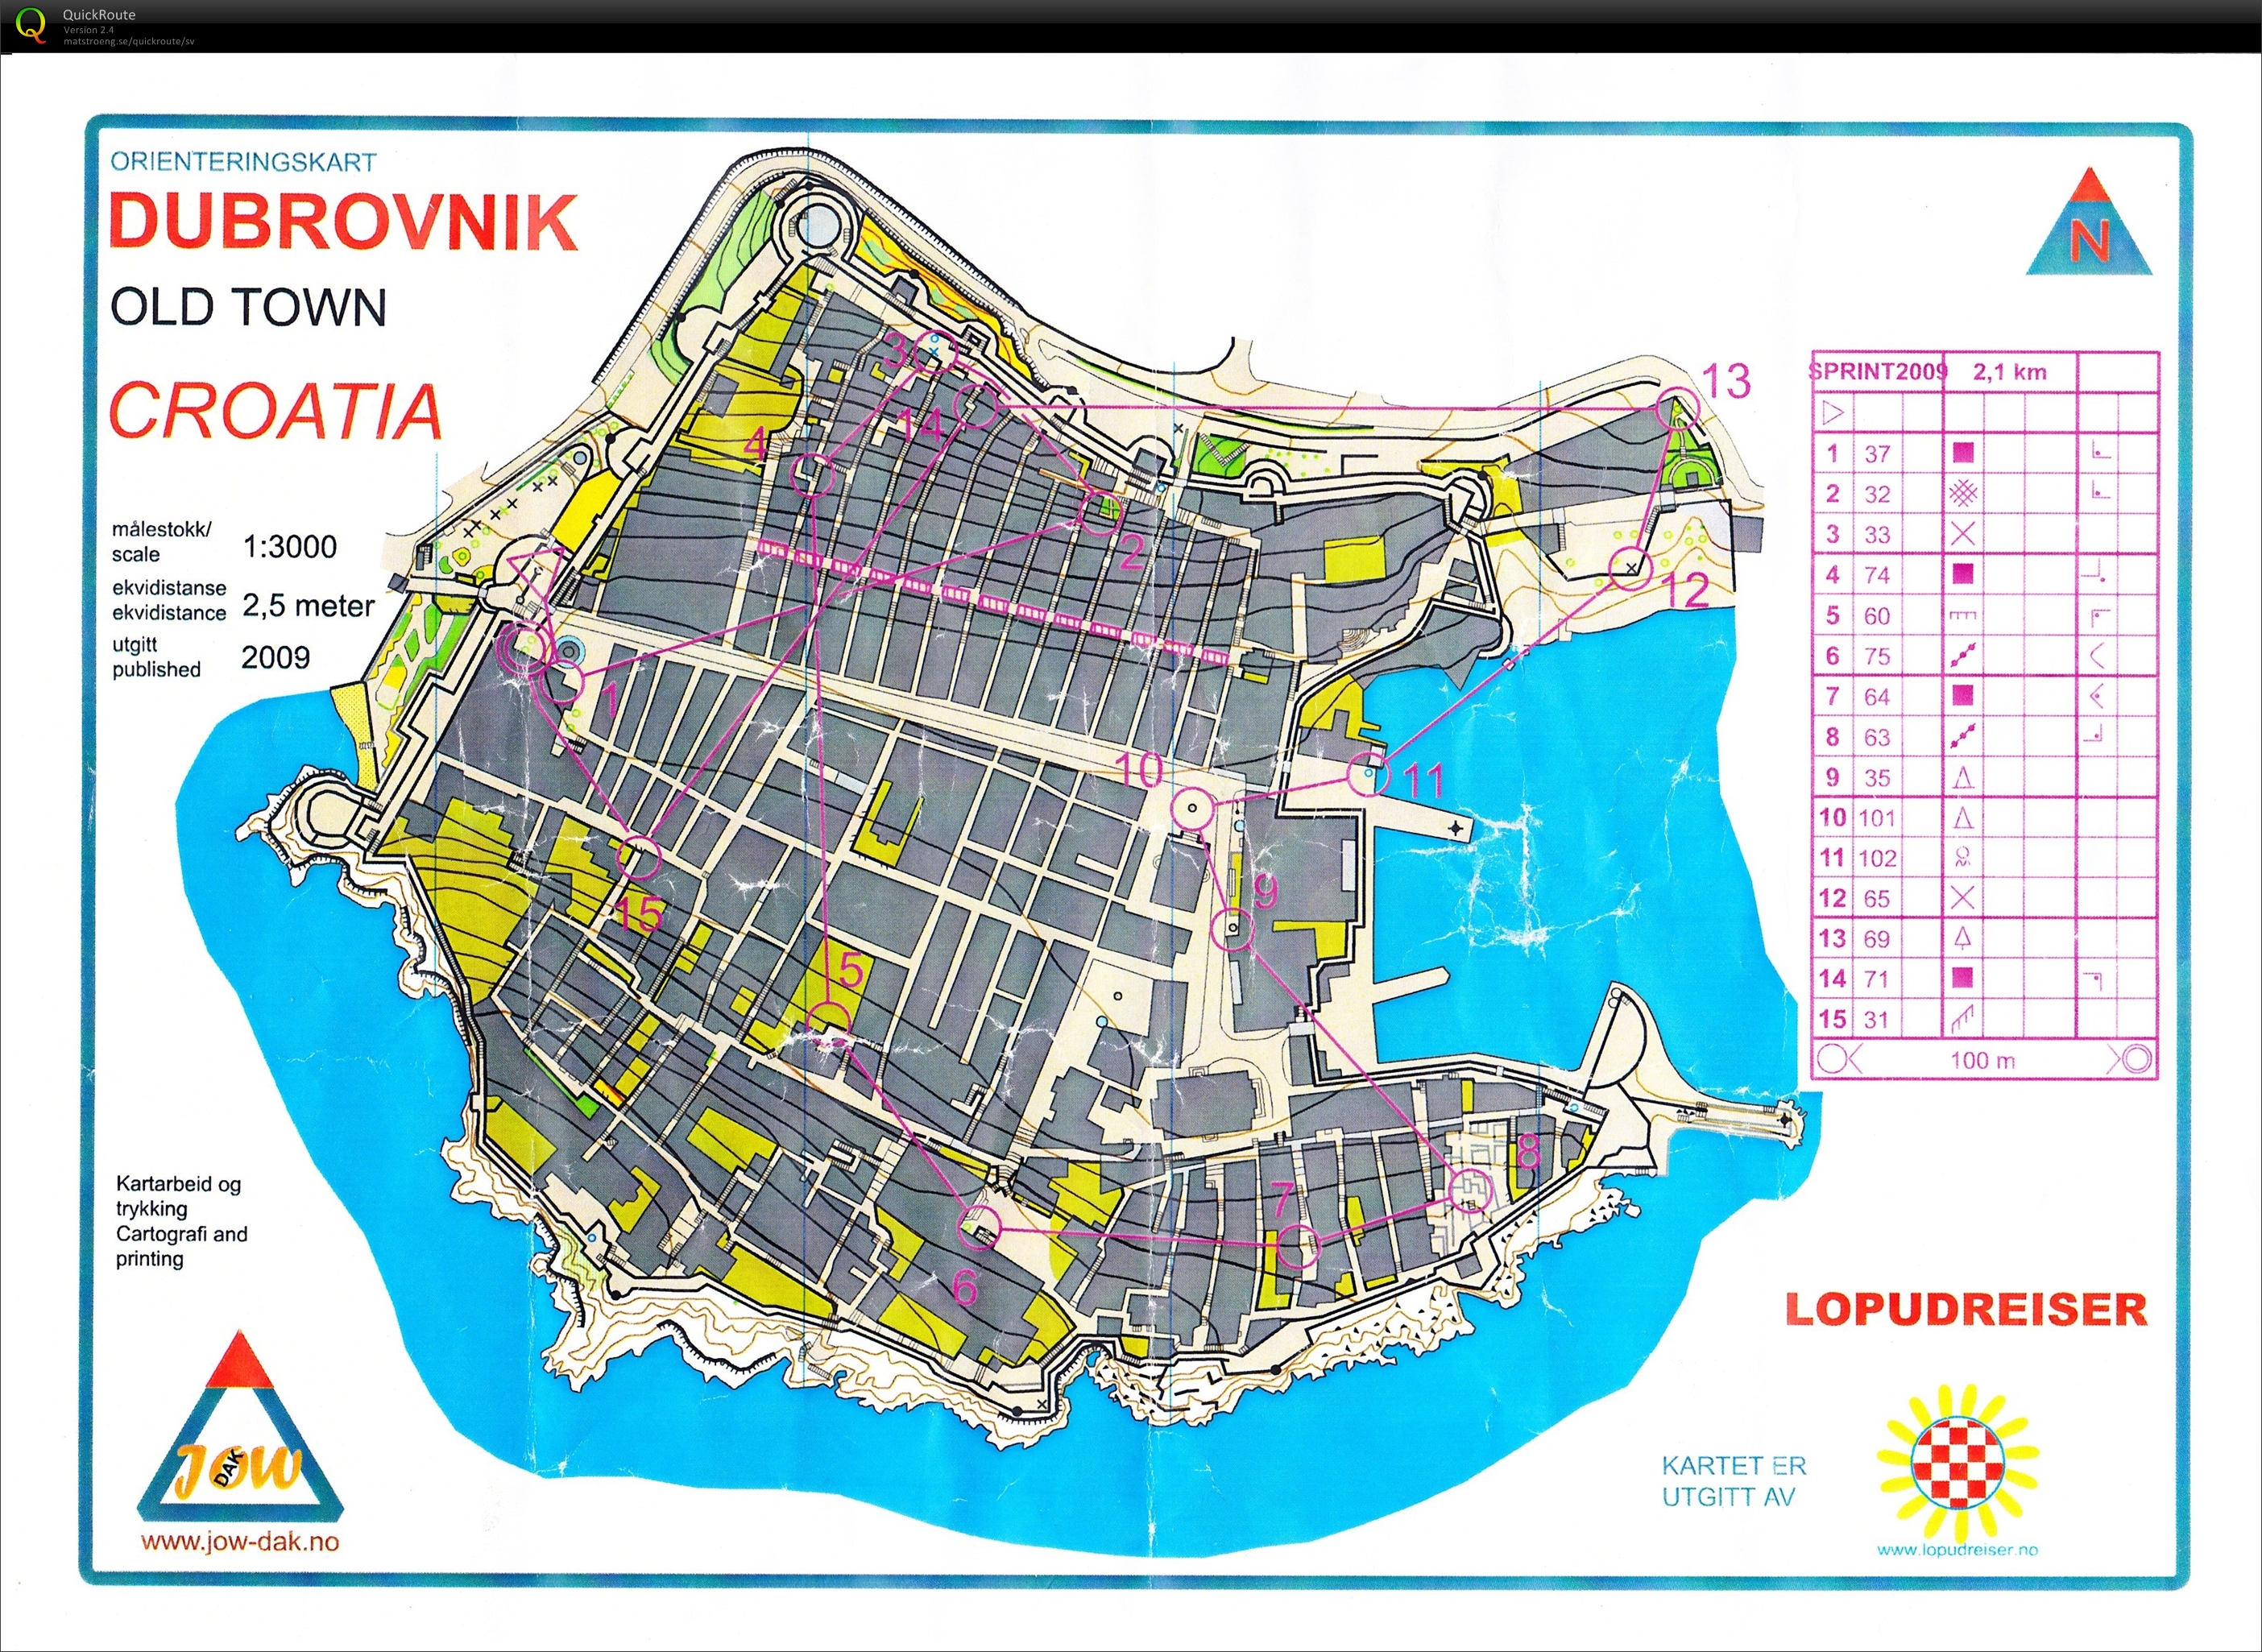 Sprinttrening, Dubrovnik (27-07-2013)